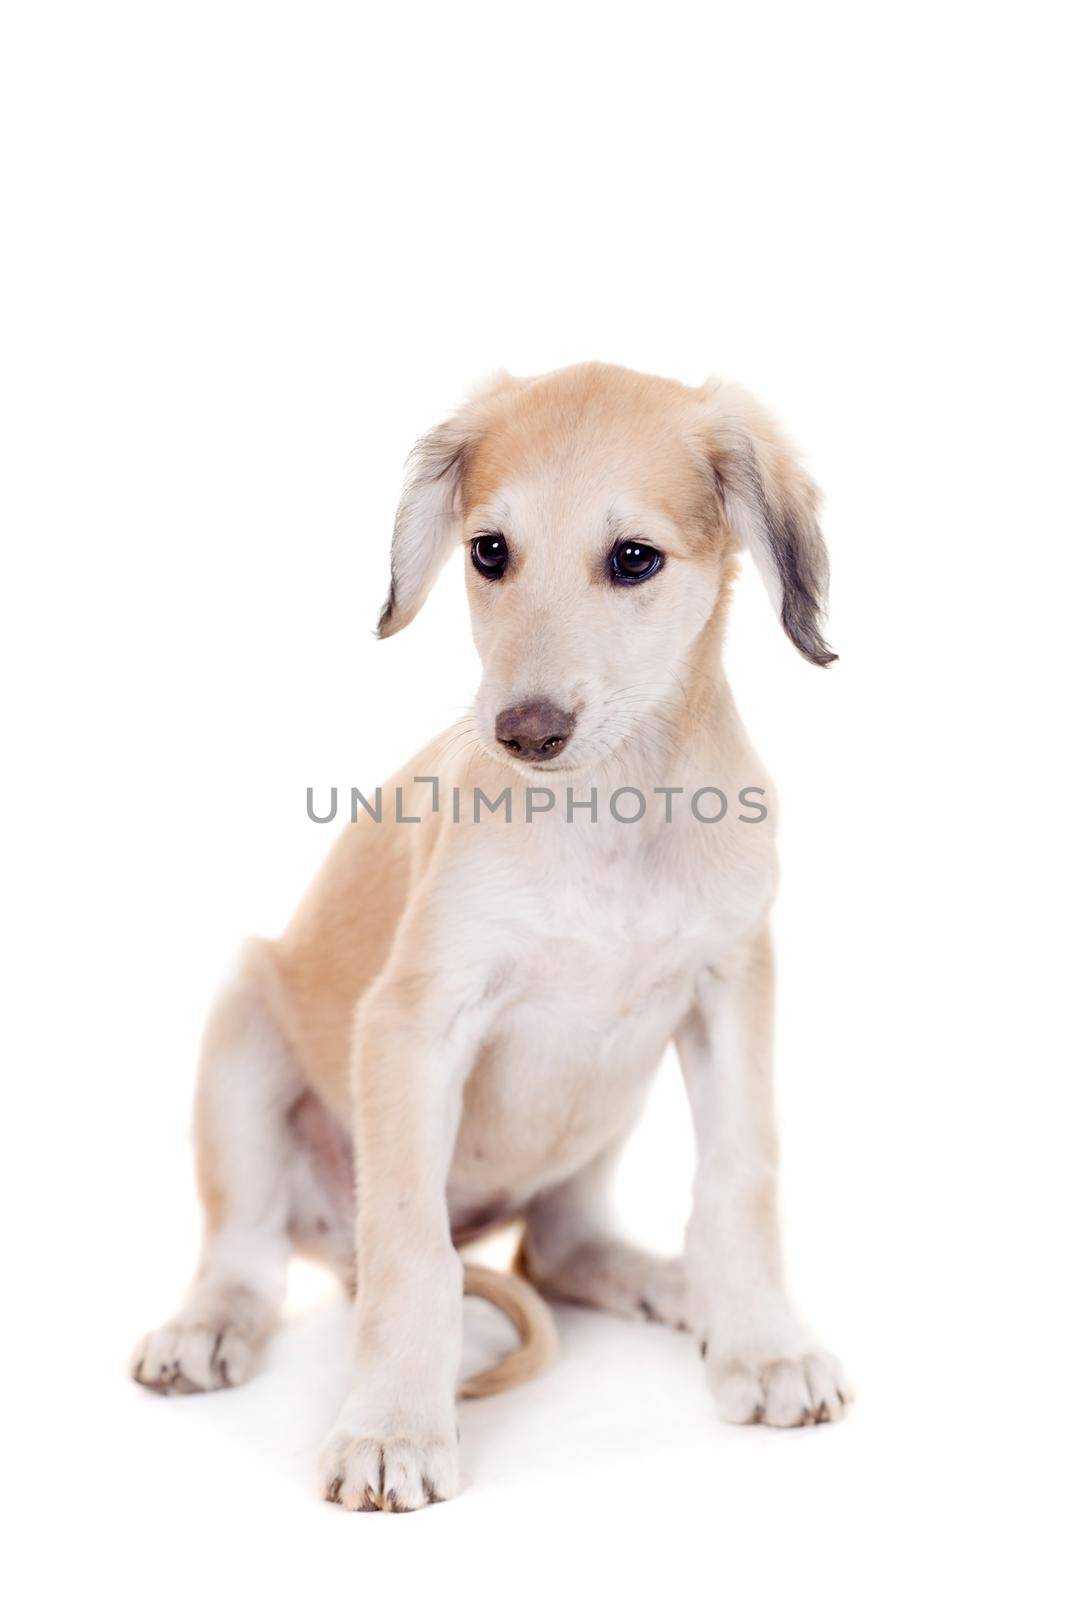 Tazy - Kazakh greyhound, 2 mounth old puppy, isolated on white